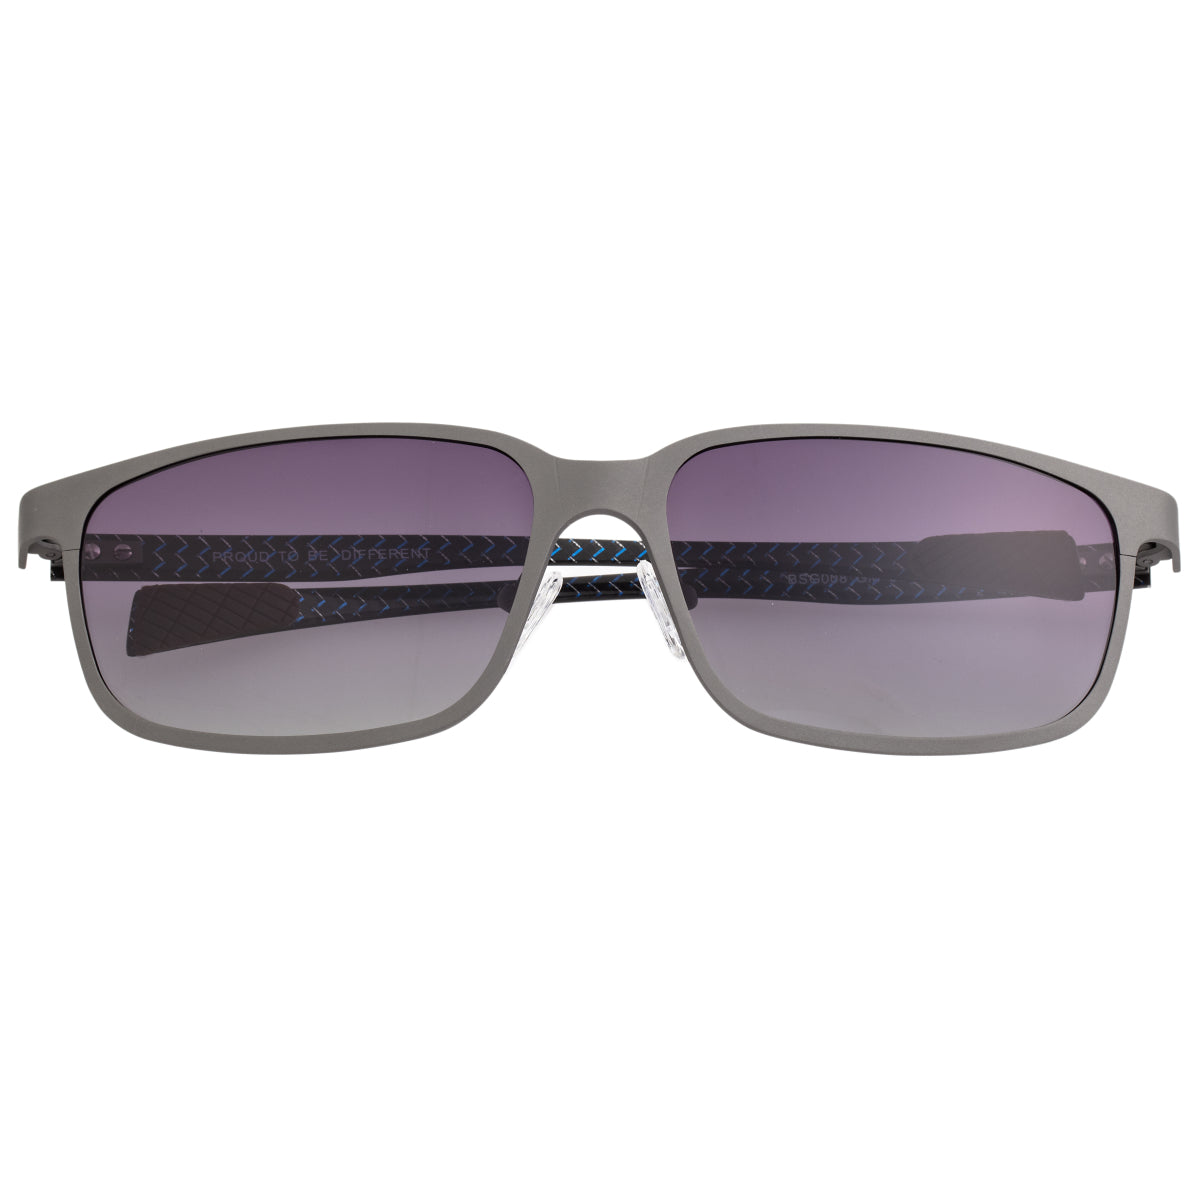 Breed Neptune Titanium and Carbon Fiber Polarized Sunglasses - Gunmetal/Black - BSG008GM